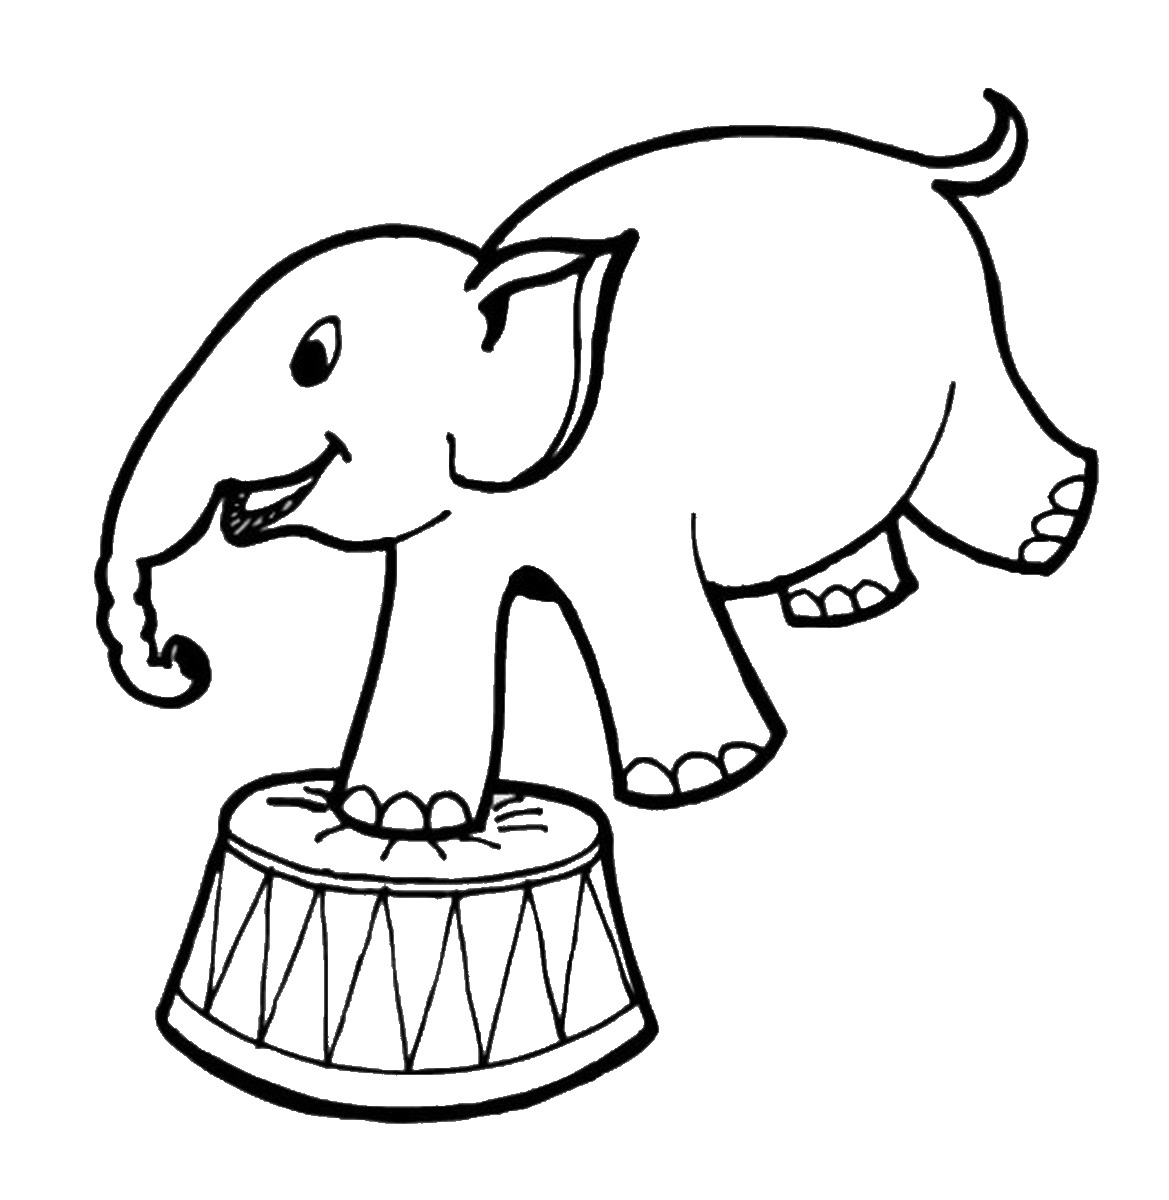 Circus Elephant for Kids